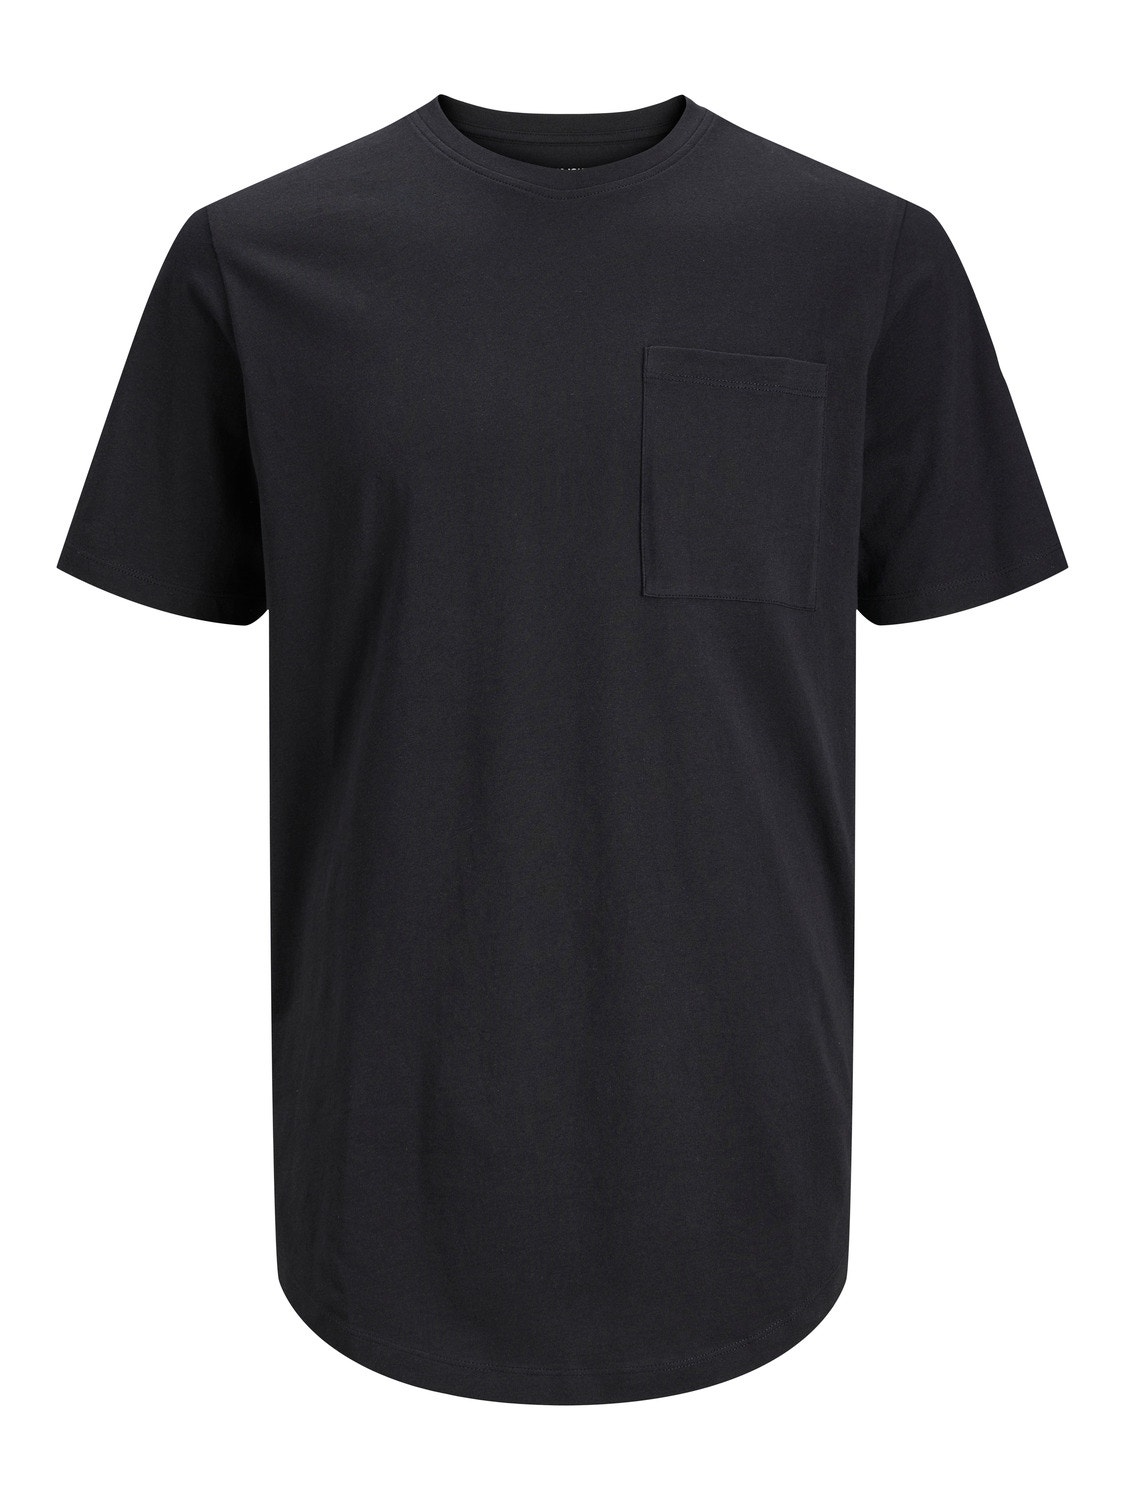 Jack & Jones Long Line Fit O-Neck Noa T-Shirt -Black - 12210945